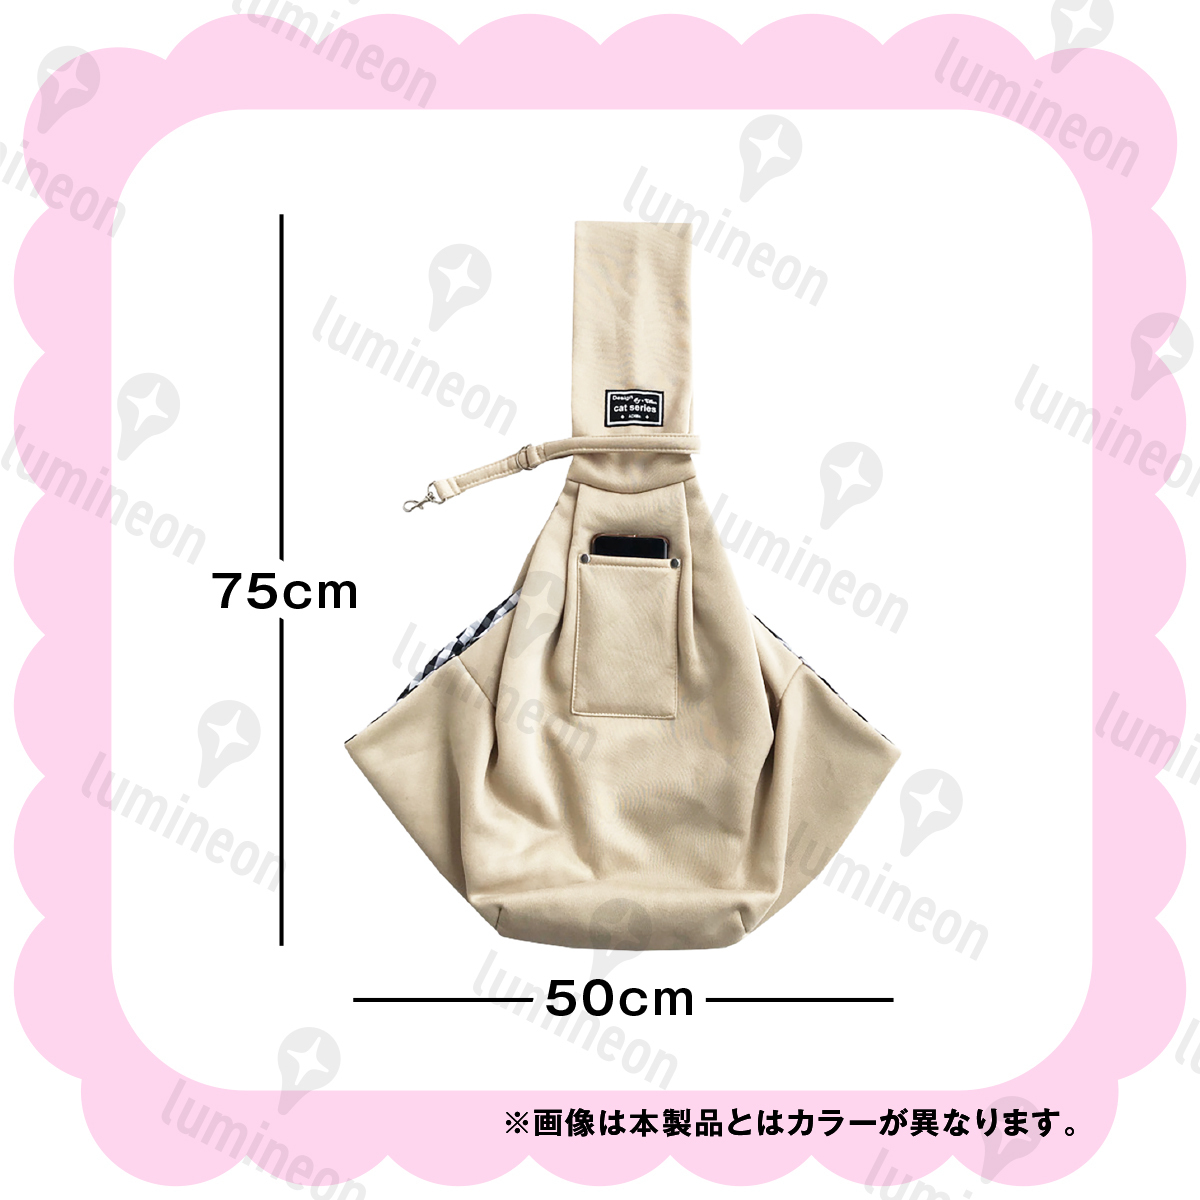  домашнее животное sling дорожная сумка плечо перевозка розовый слинг-переноска ... шнурок рюкзак Cart маленький размер собака средний собака задний g061d 1